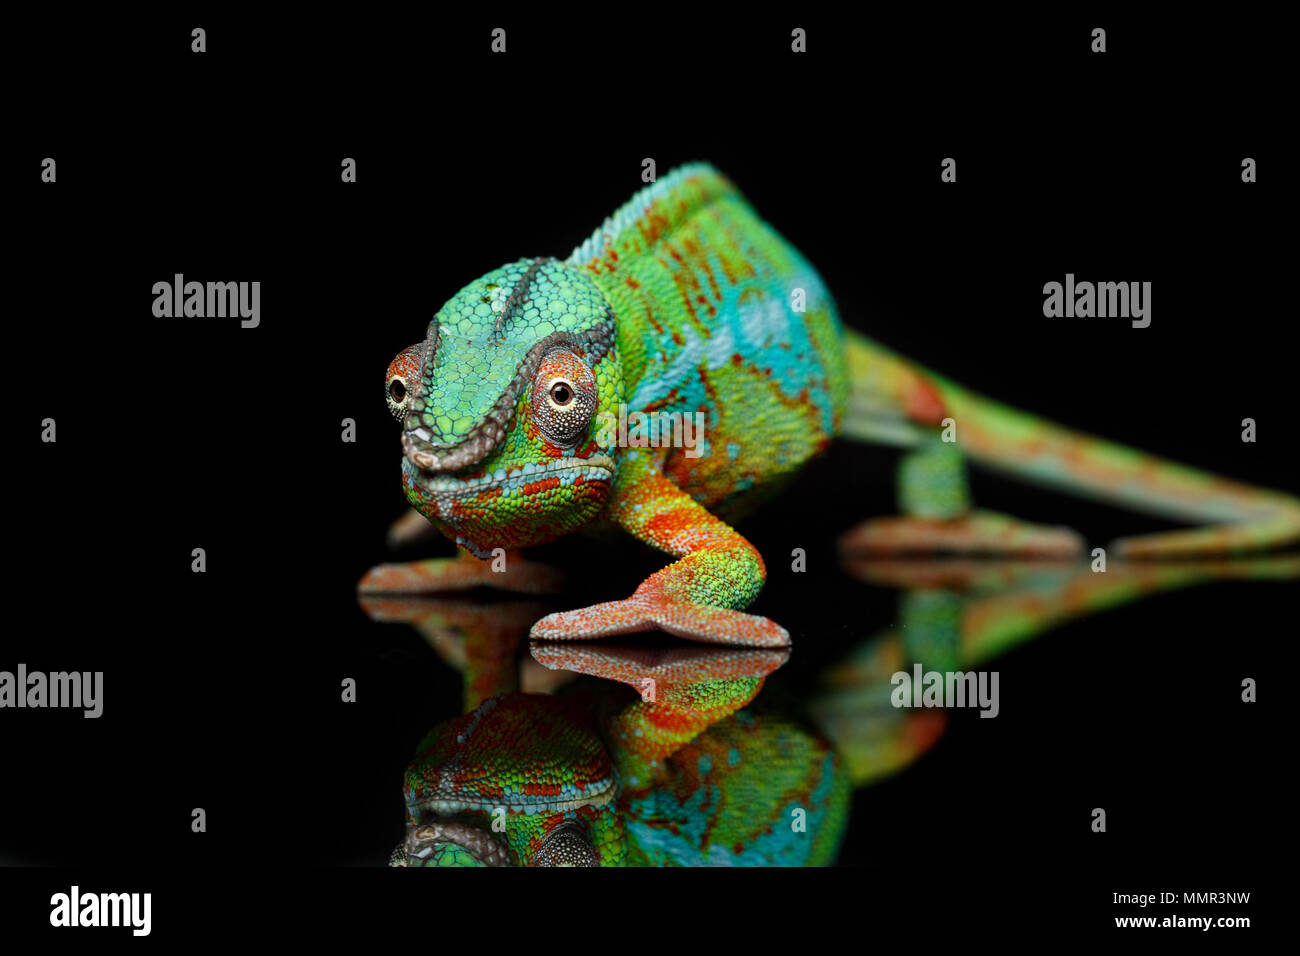 alive chameleon reptile over black background. studio shot. copy space. Stock Photo